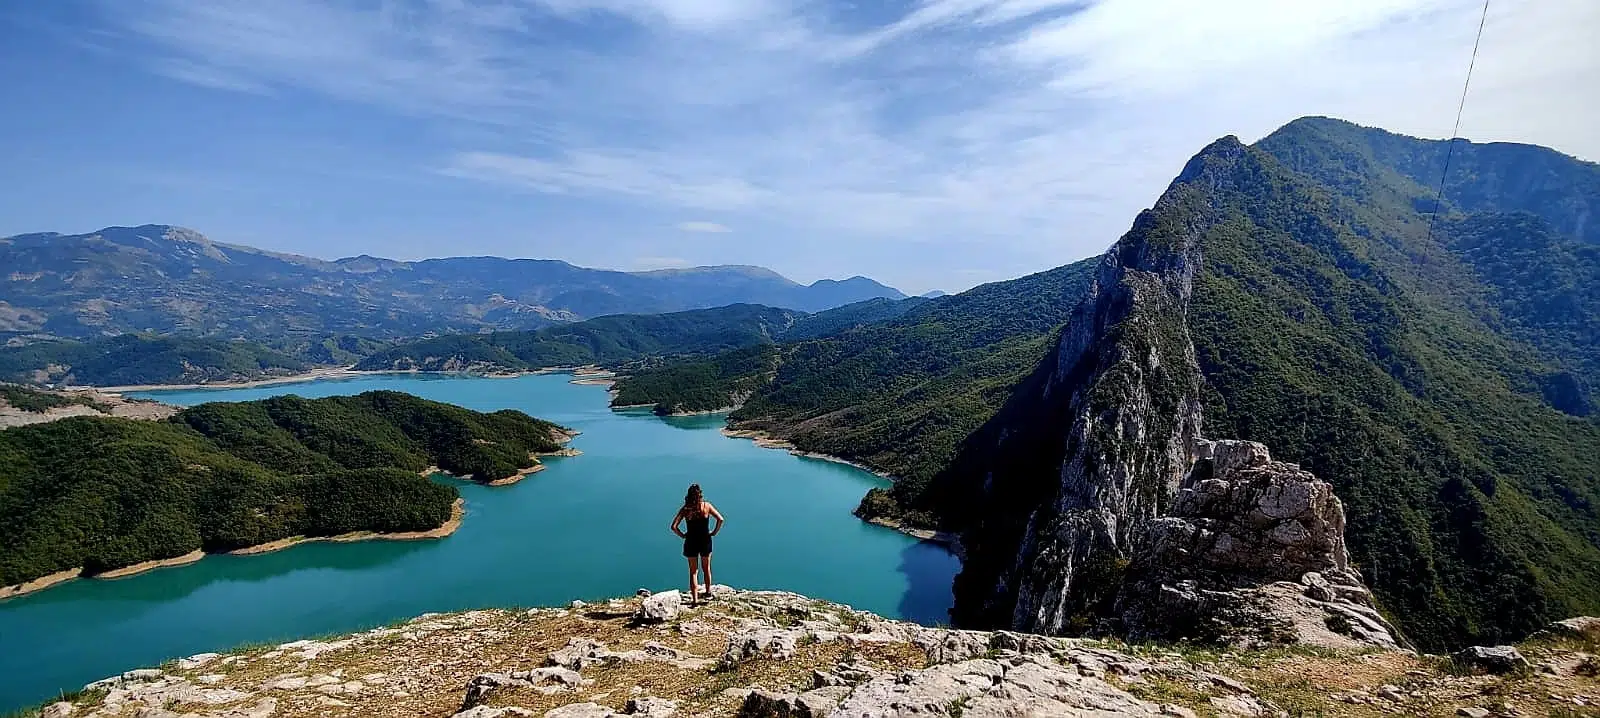 Wandelen in Albanië? Minimale inspanning & maximale uitzichten bij Lake Bovilla